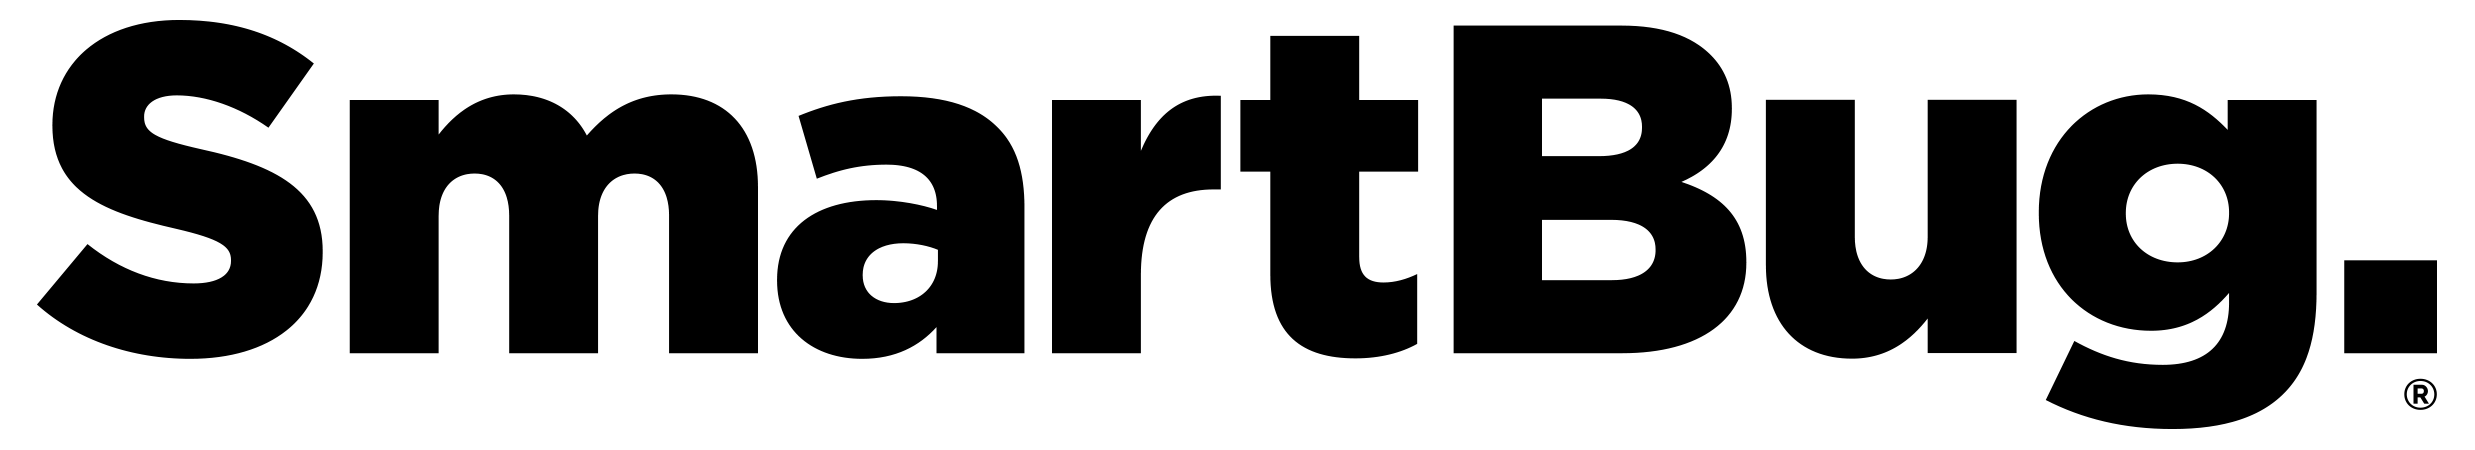 SmartBug_Logo_Final_Black_Large